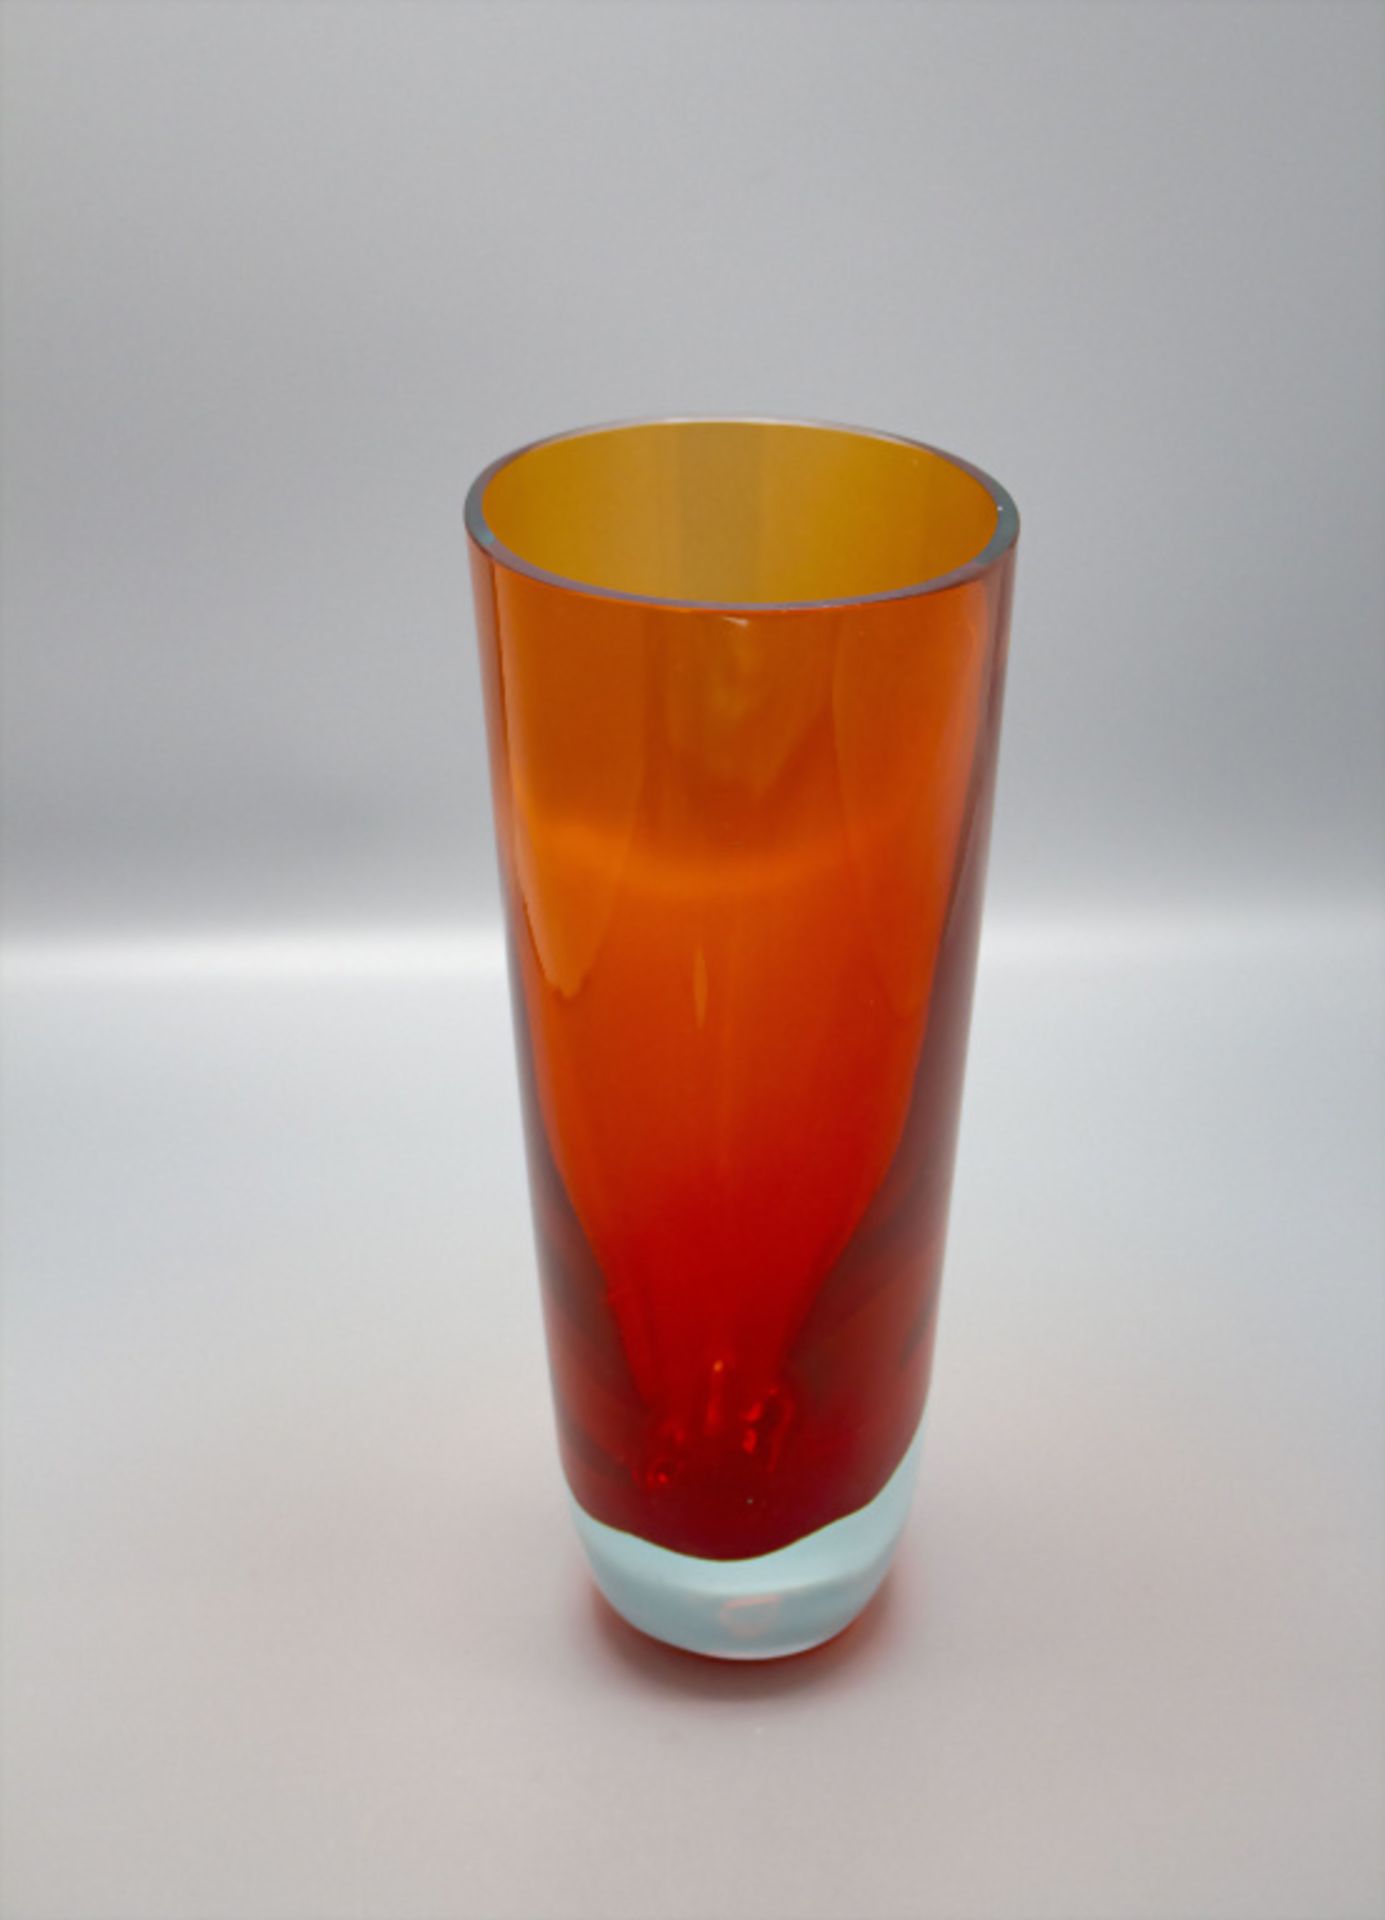 Glasziervase / A decorative glass vase, wohl Murano, 70/80er Jahre - Image 2 of 3